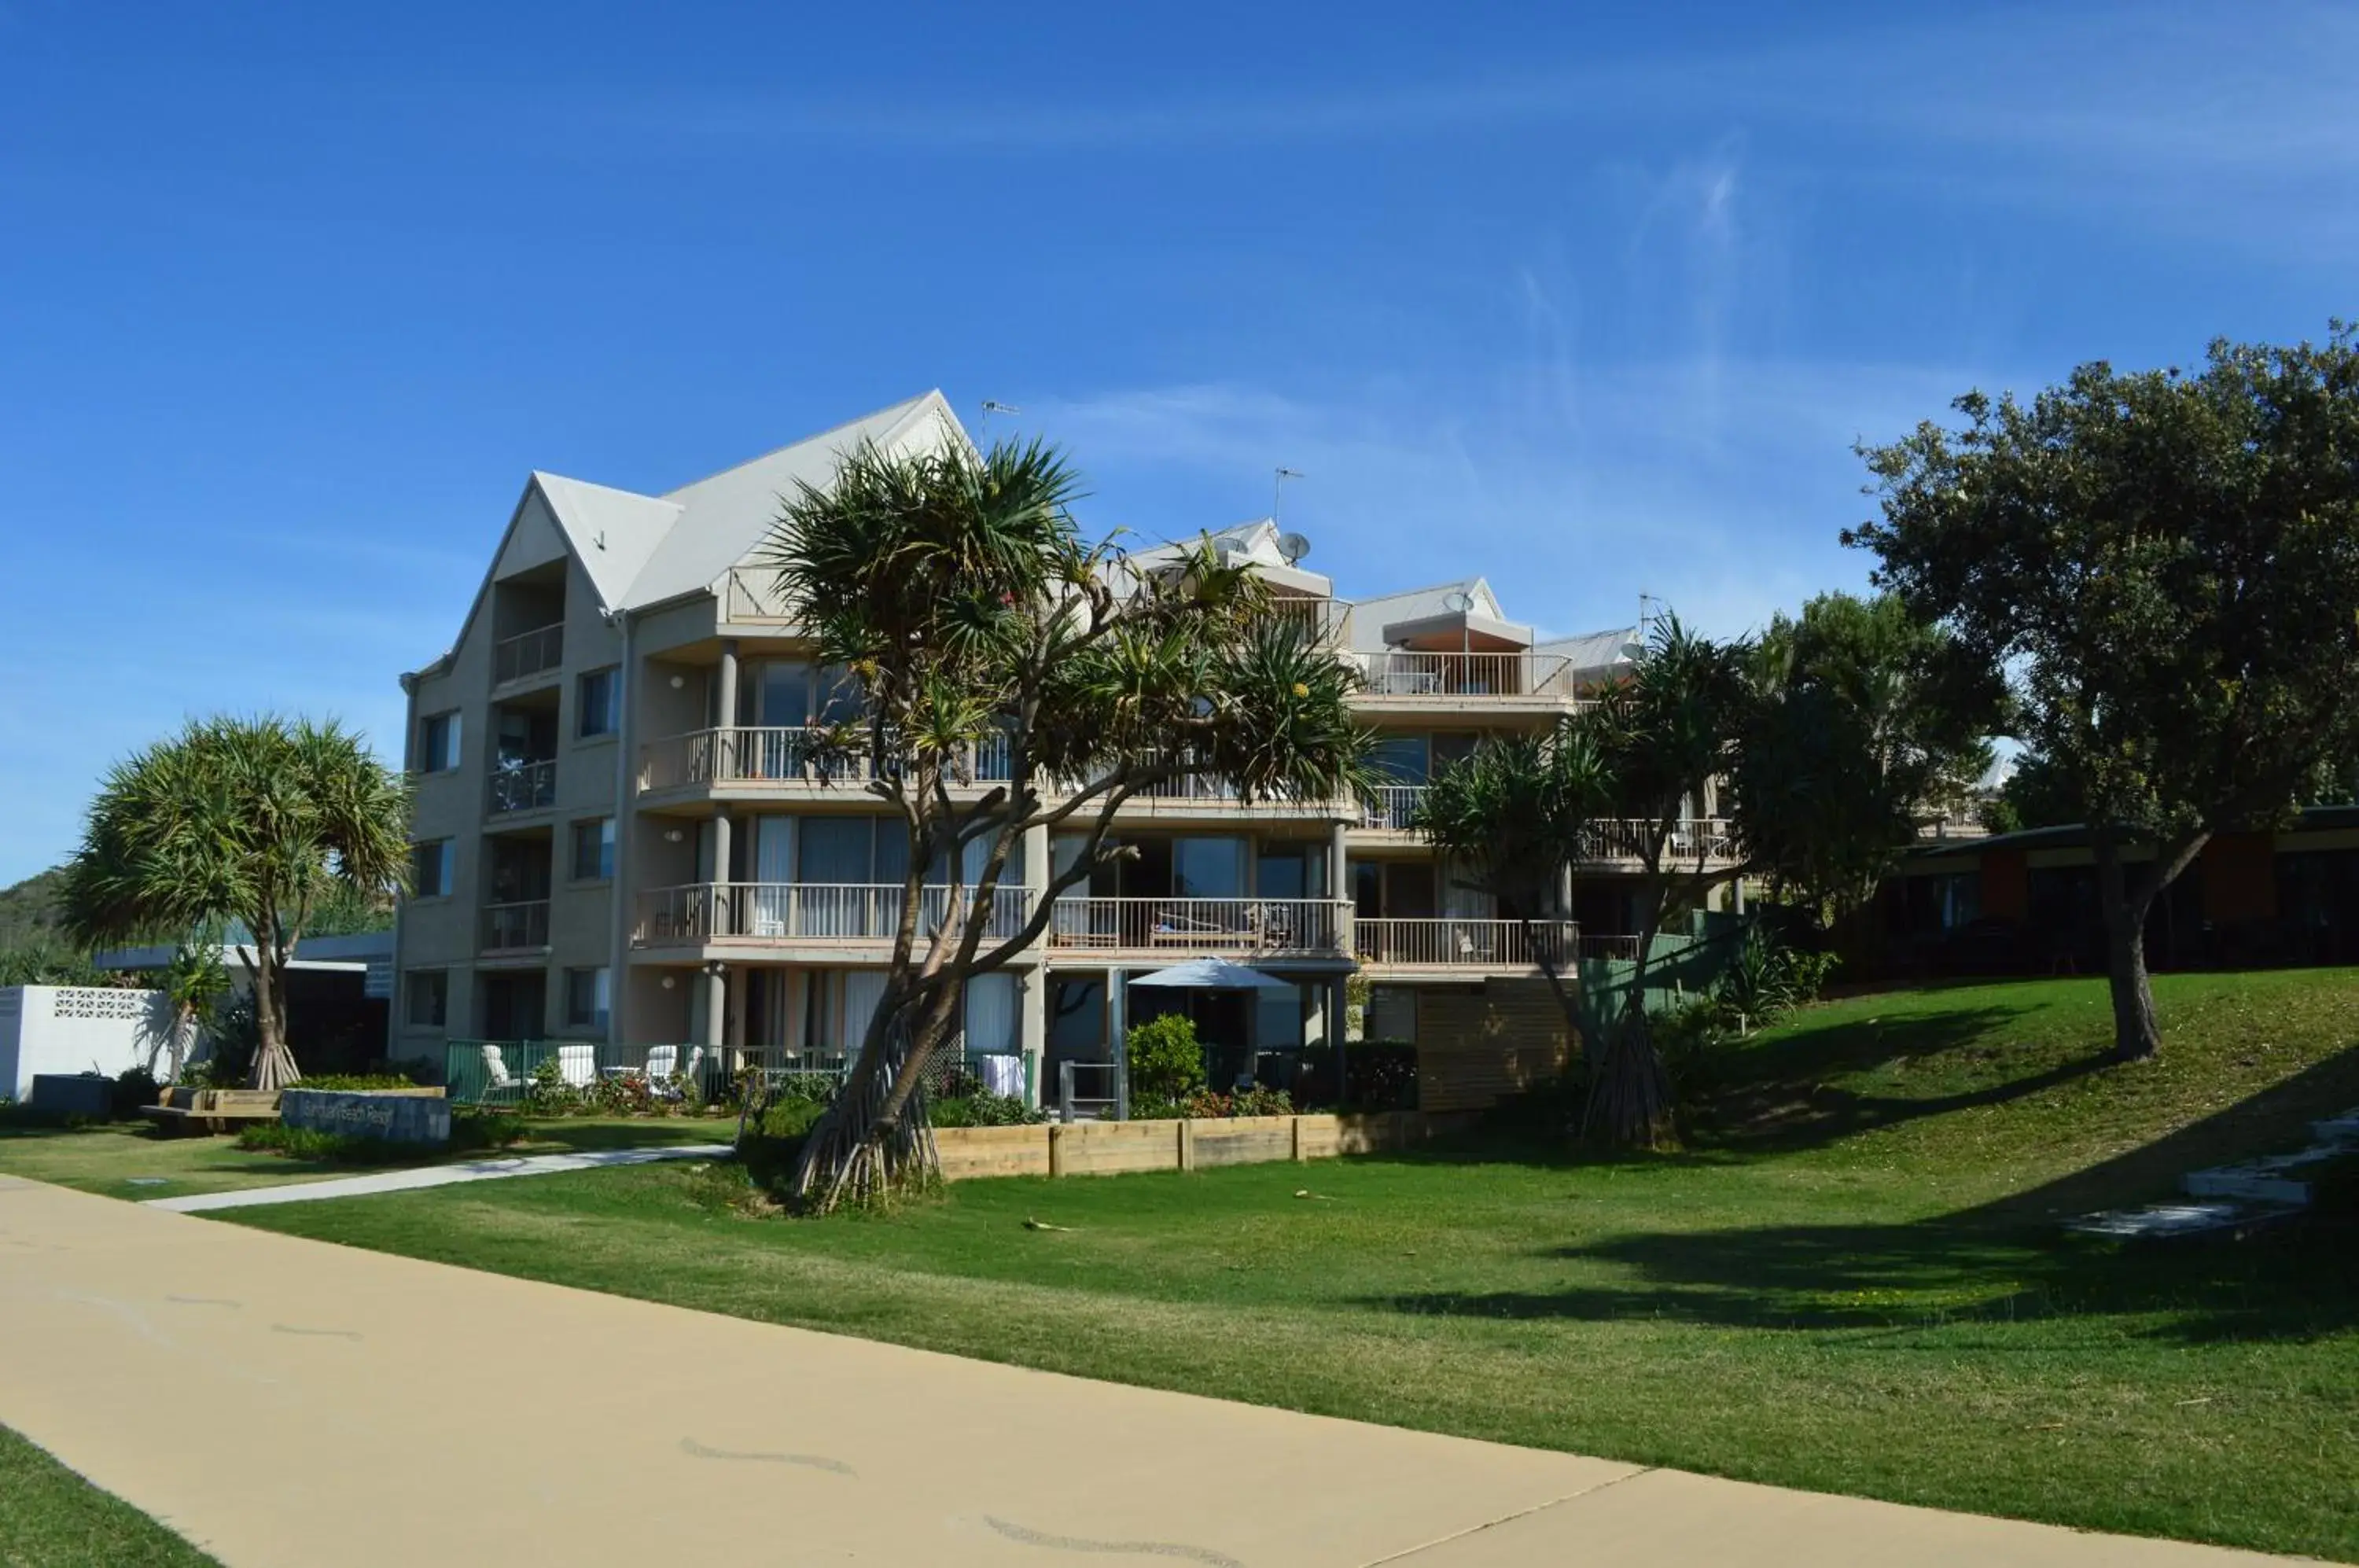 Property Building in Sanctuary Beach Resort